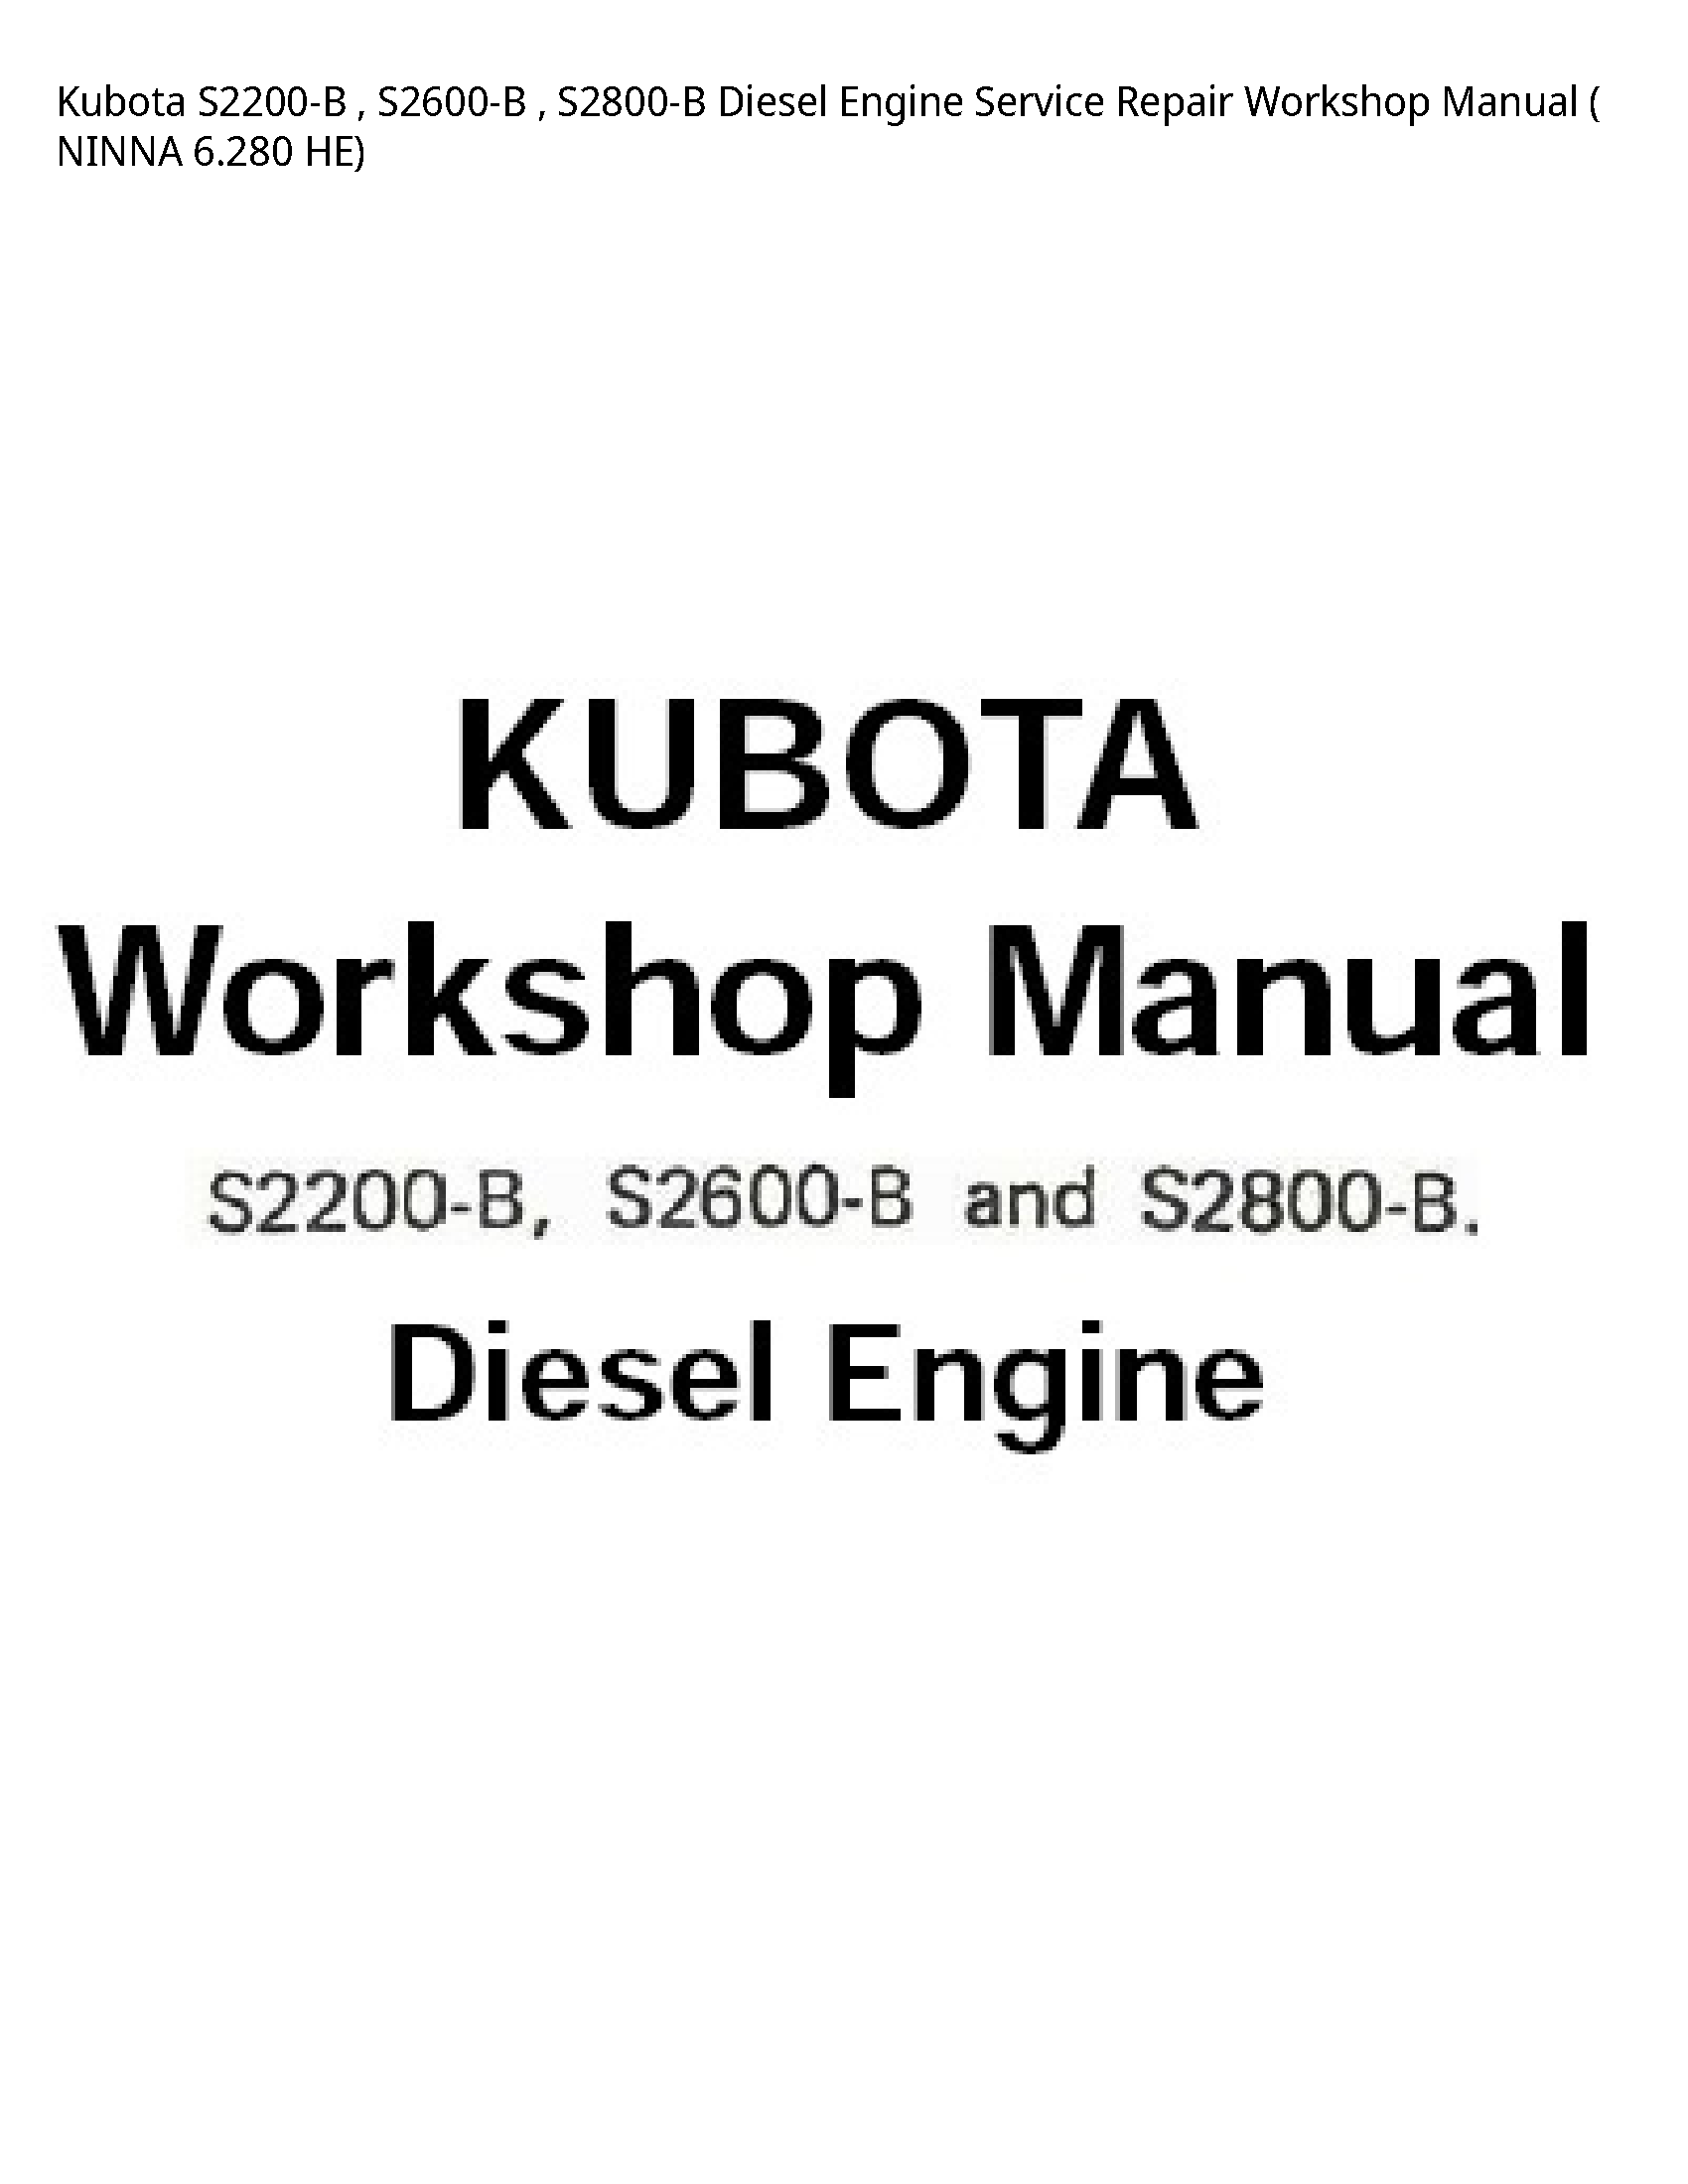 Kubota S2200-B Diesel Engine manual